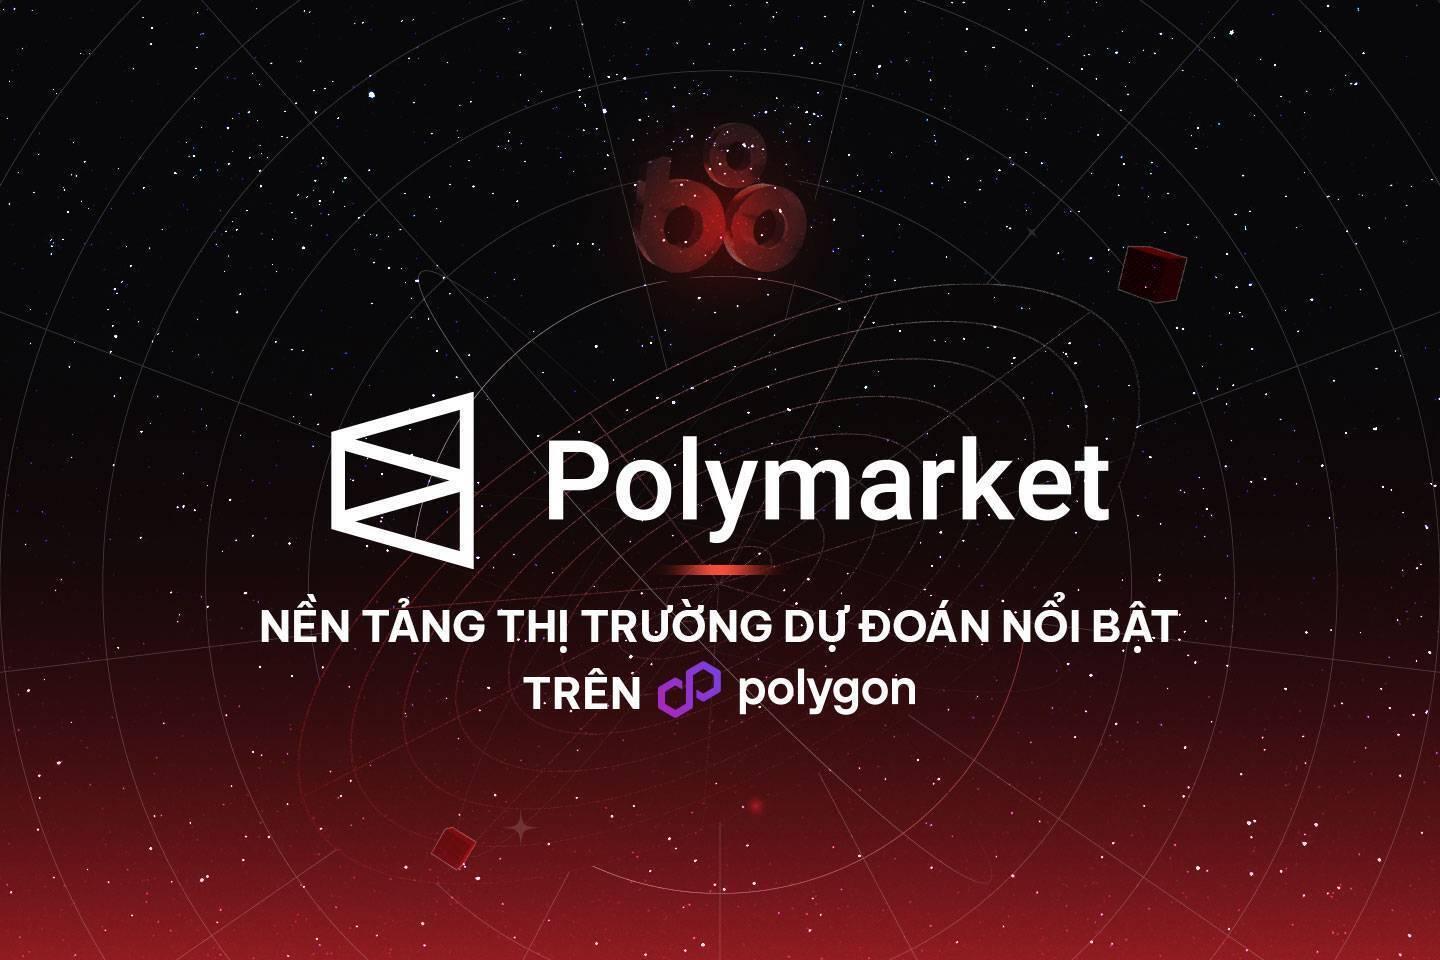 polymarket-nen-tang-thi-truong-du-doan-noi-bat-tren-polygon